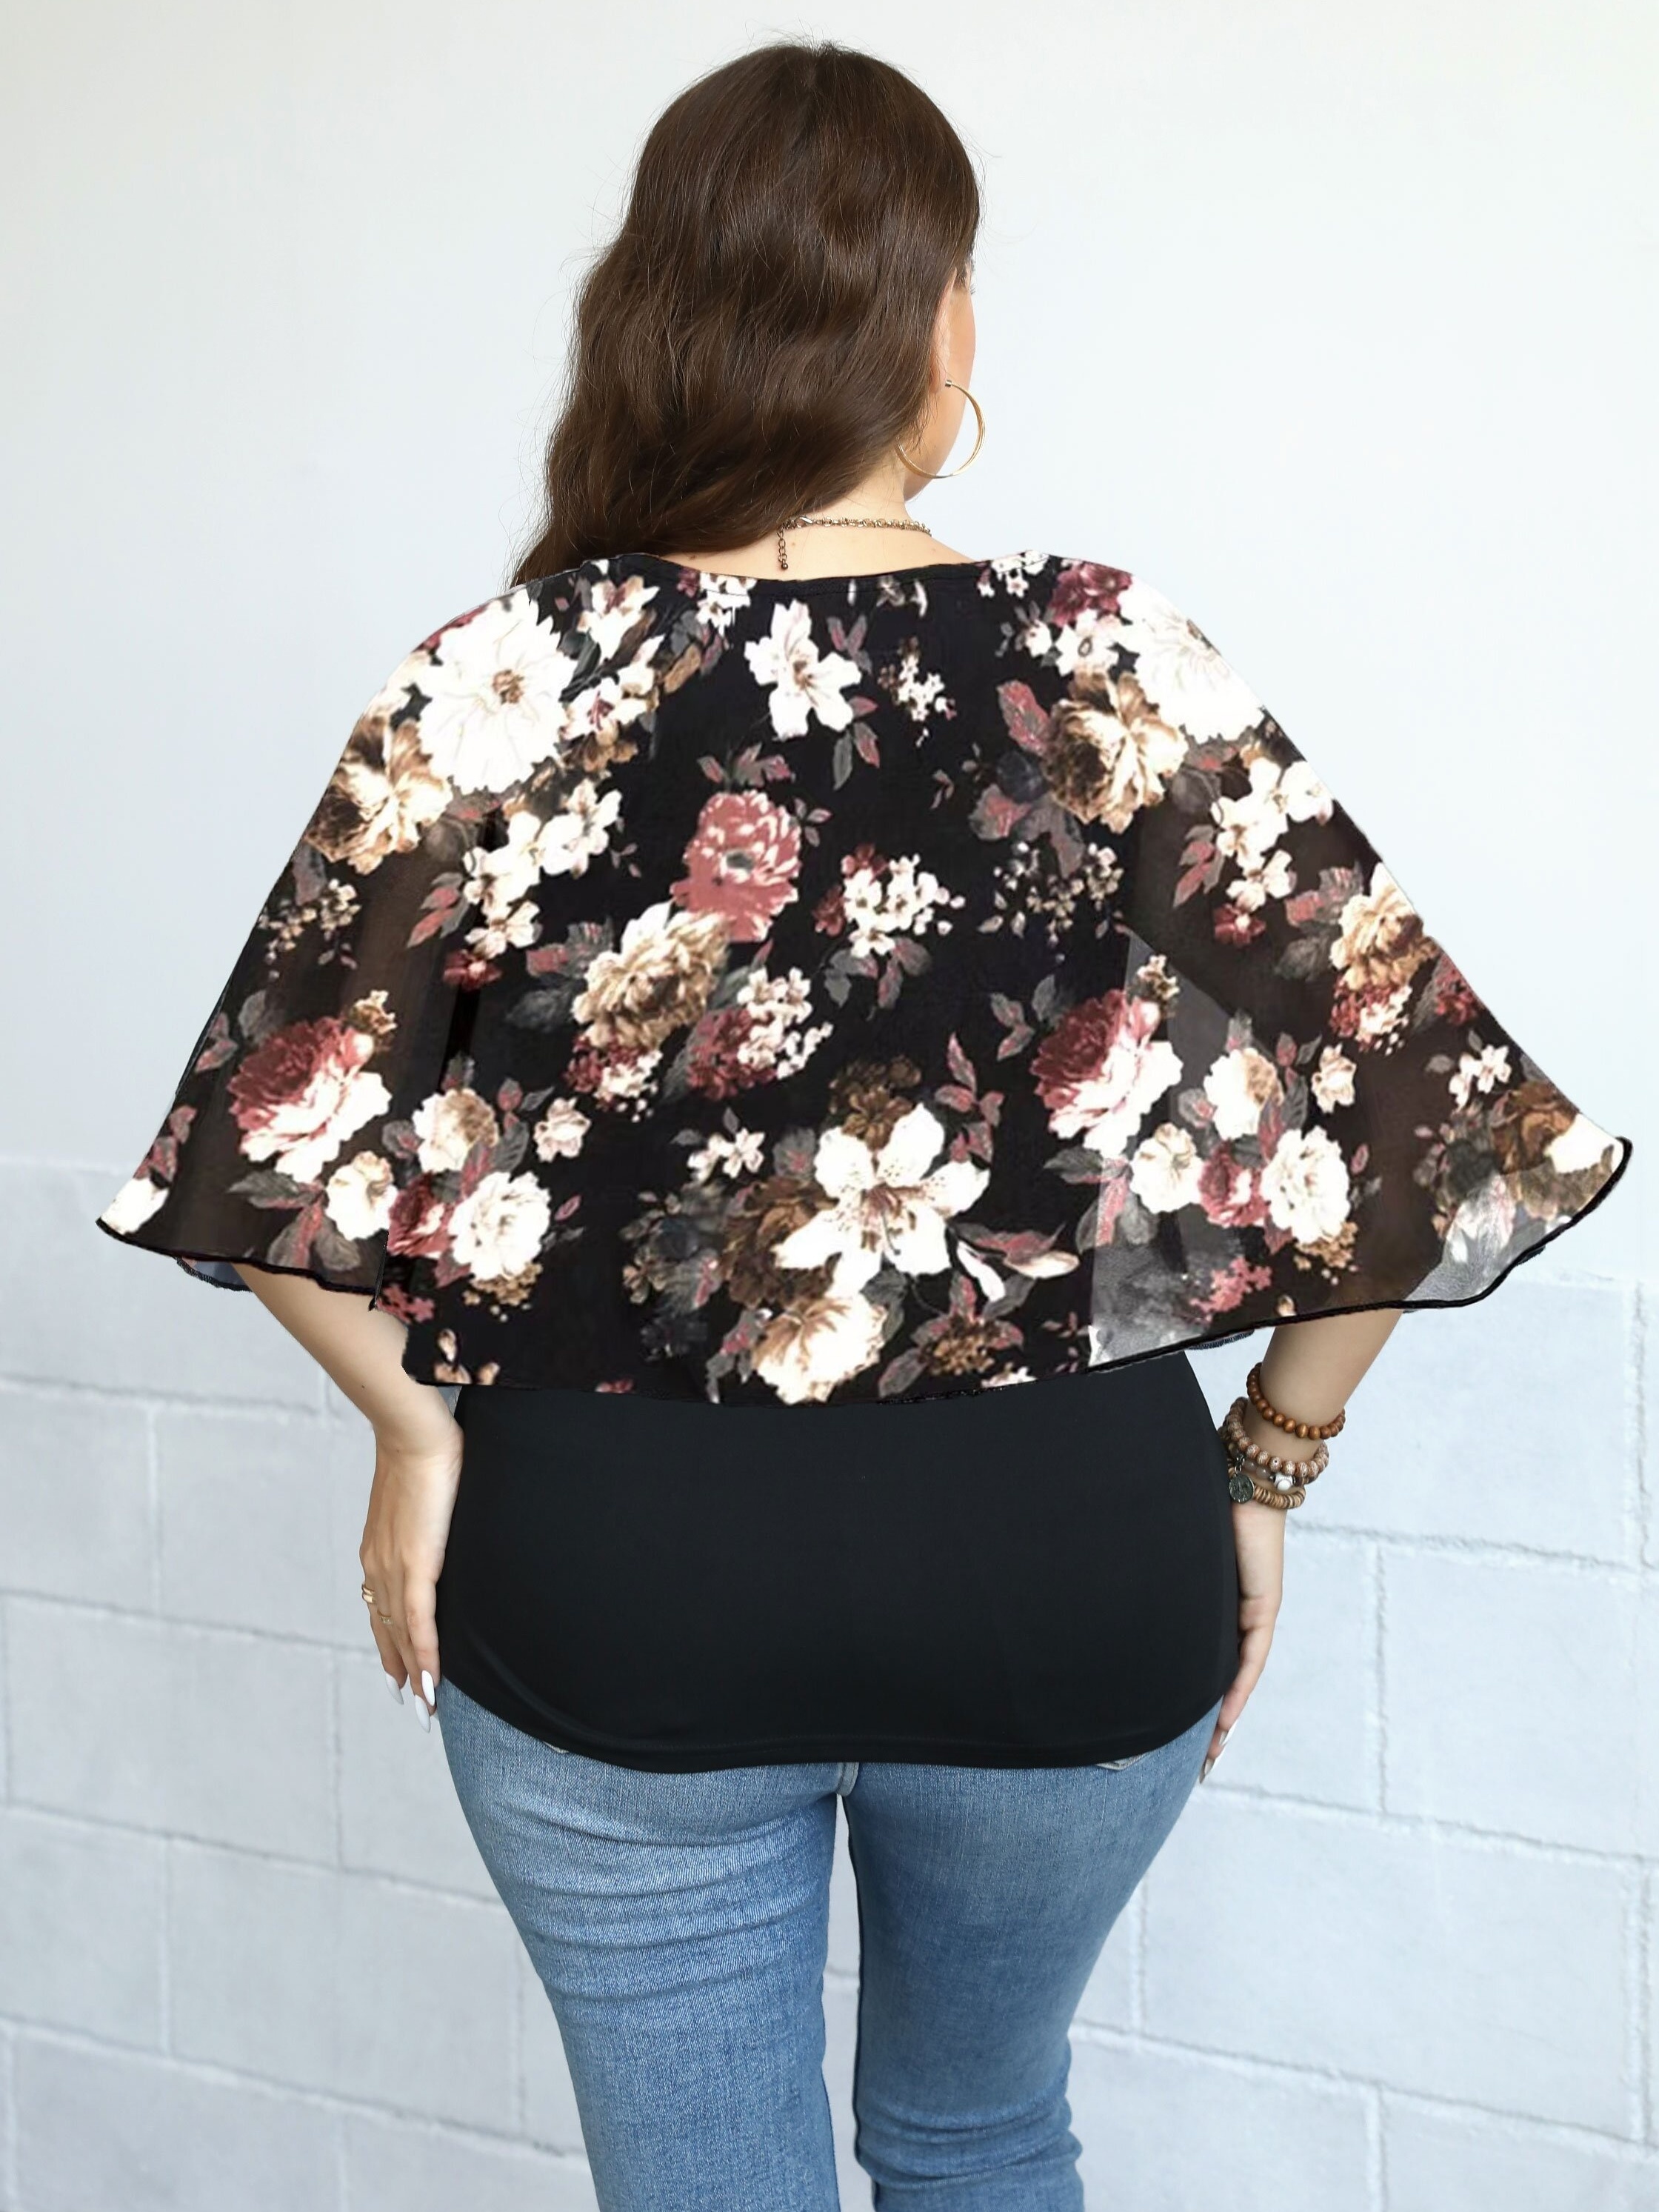 OLLOUM Plus Size Tops for Women Summer Floral Print Tunic Spring Tops  Crewneck Short Sleeve Shirts Dressy Casual Blouse L-5XL (Color : LIGHT  BLUE, Size : XL) : : Fashion